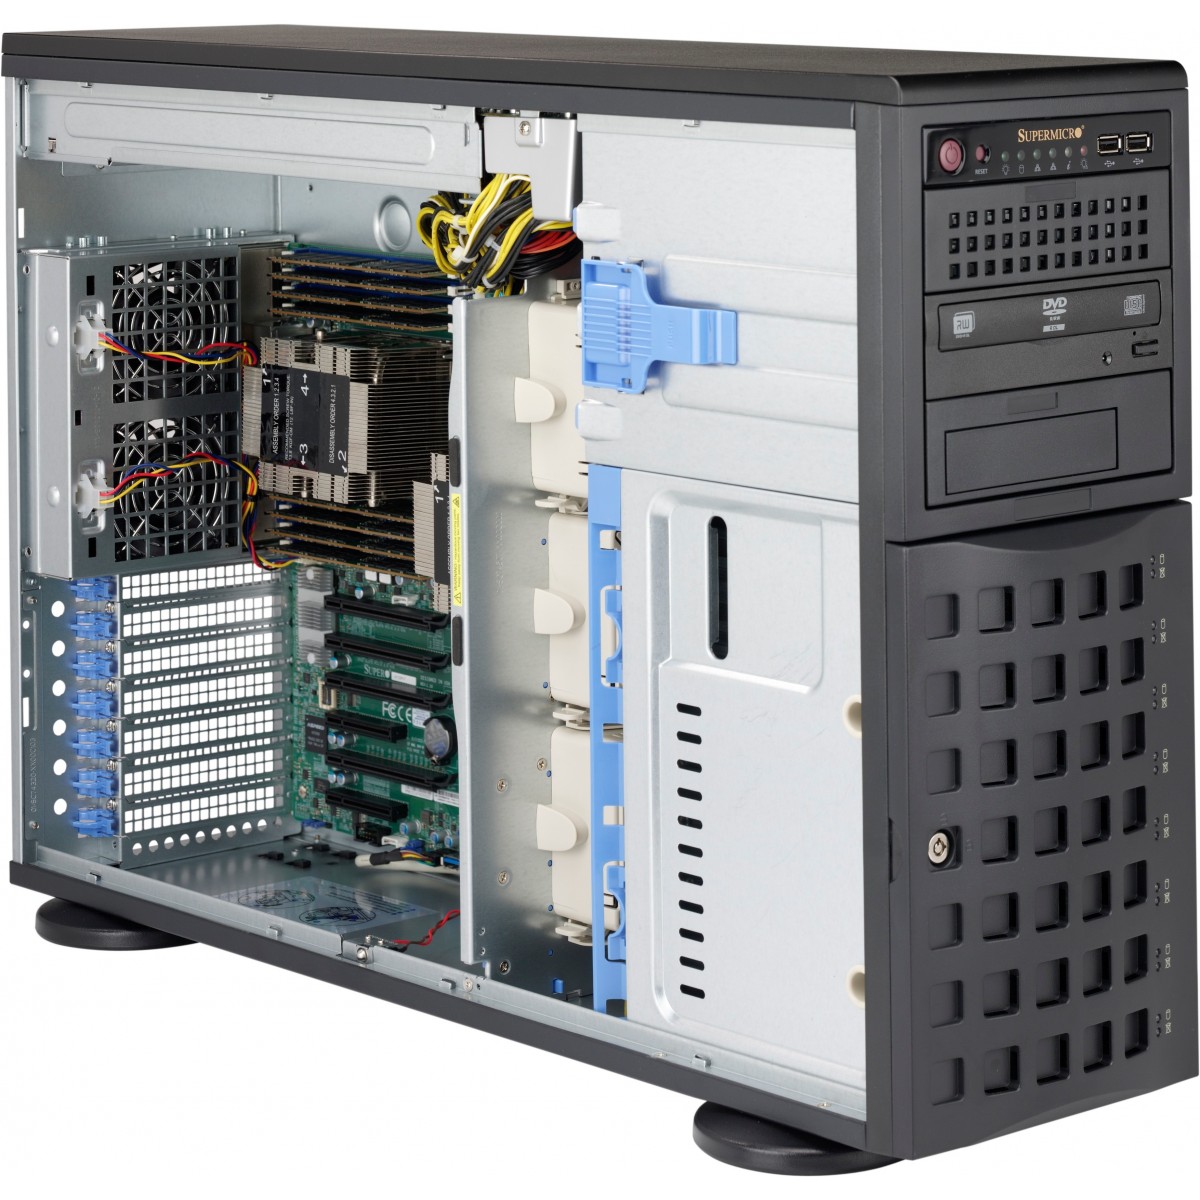 Supermicro CSE-745BAC-R1K23B-SQ - Full Tower - Server - Black - ATX - EATX - micro ATX - 4U - HDD - Network - Power - Power fail